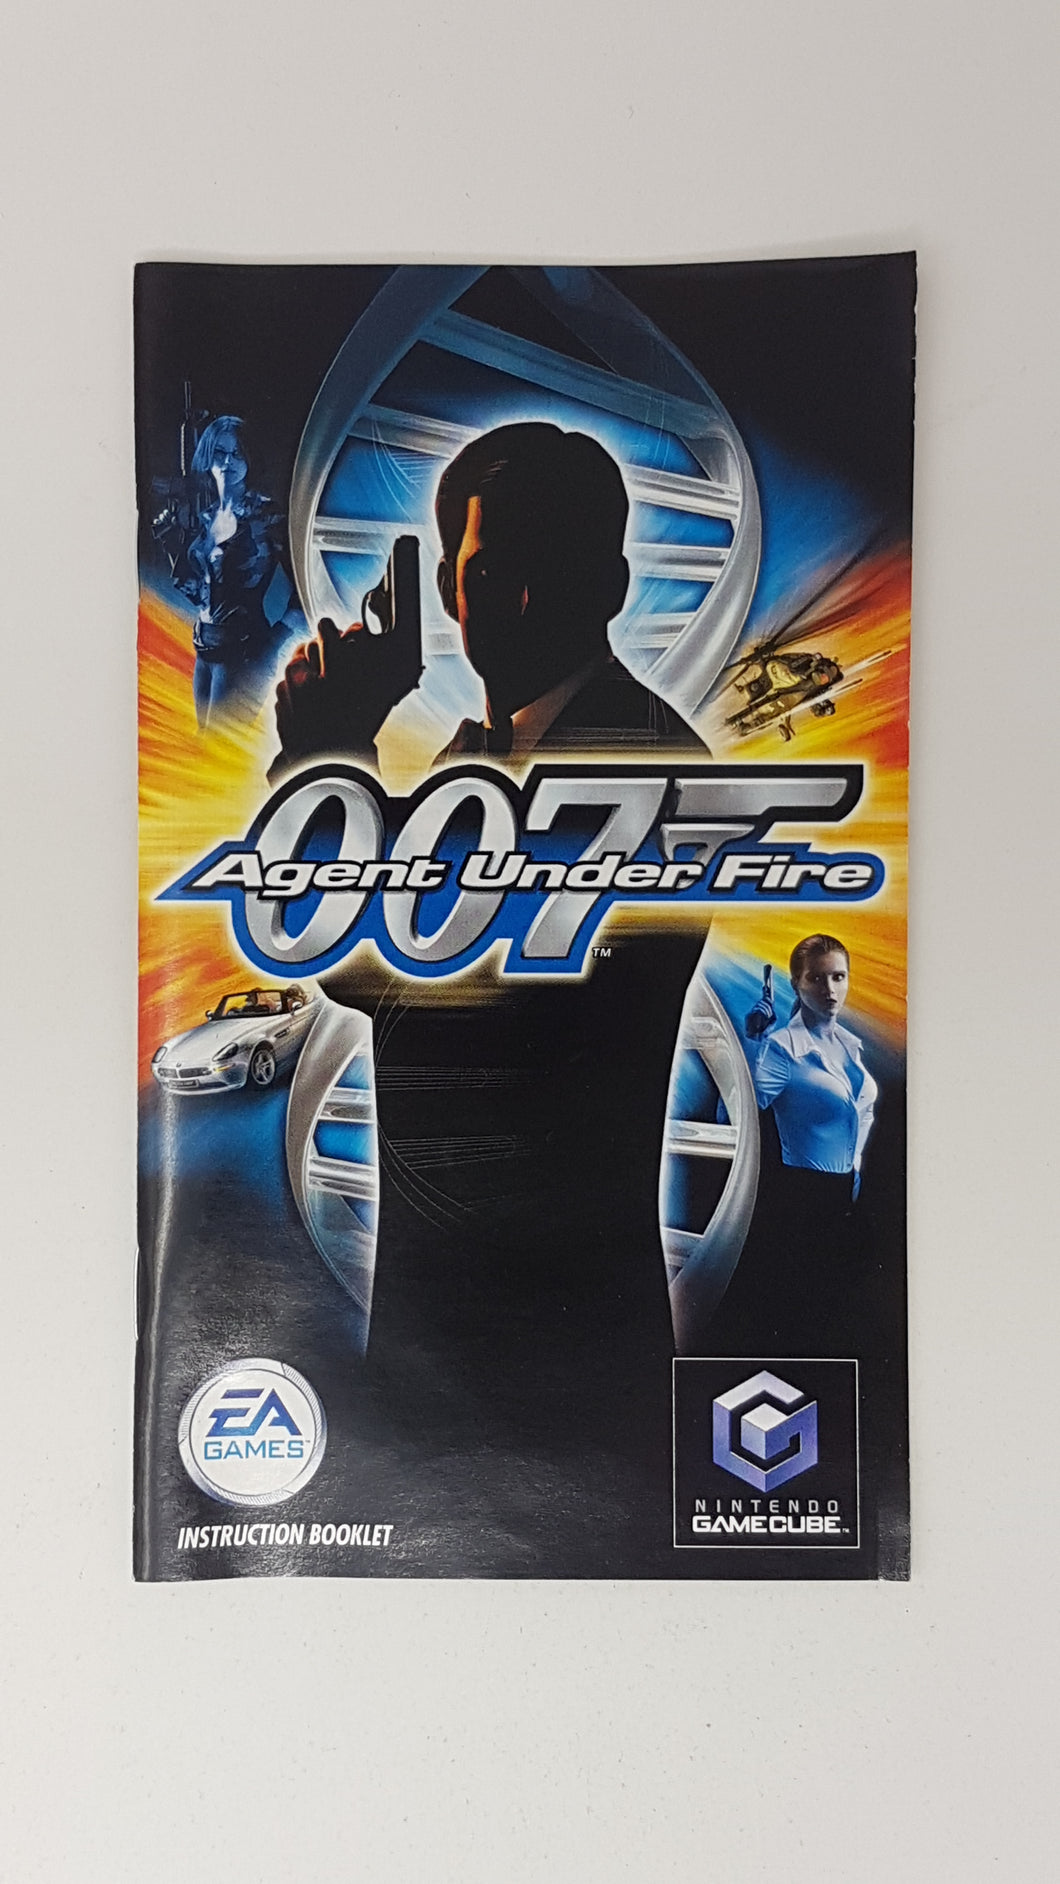 007 Agent Under Fire [manuel] - Nintendo GameCube